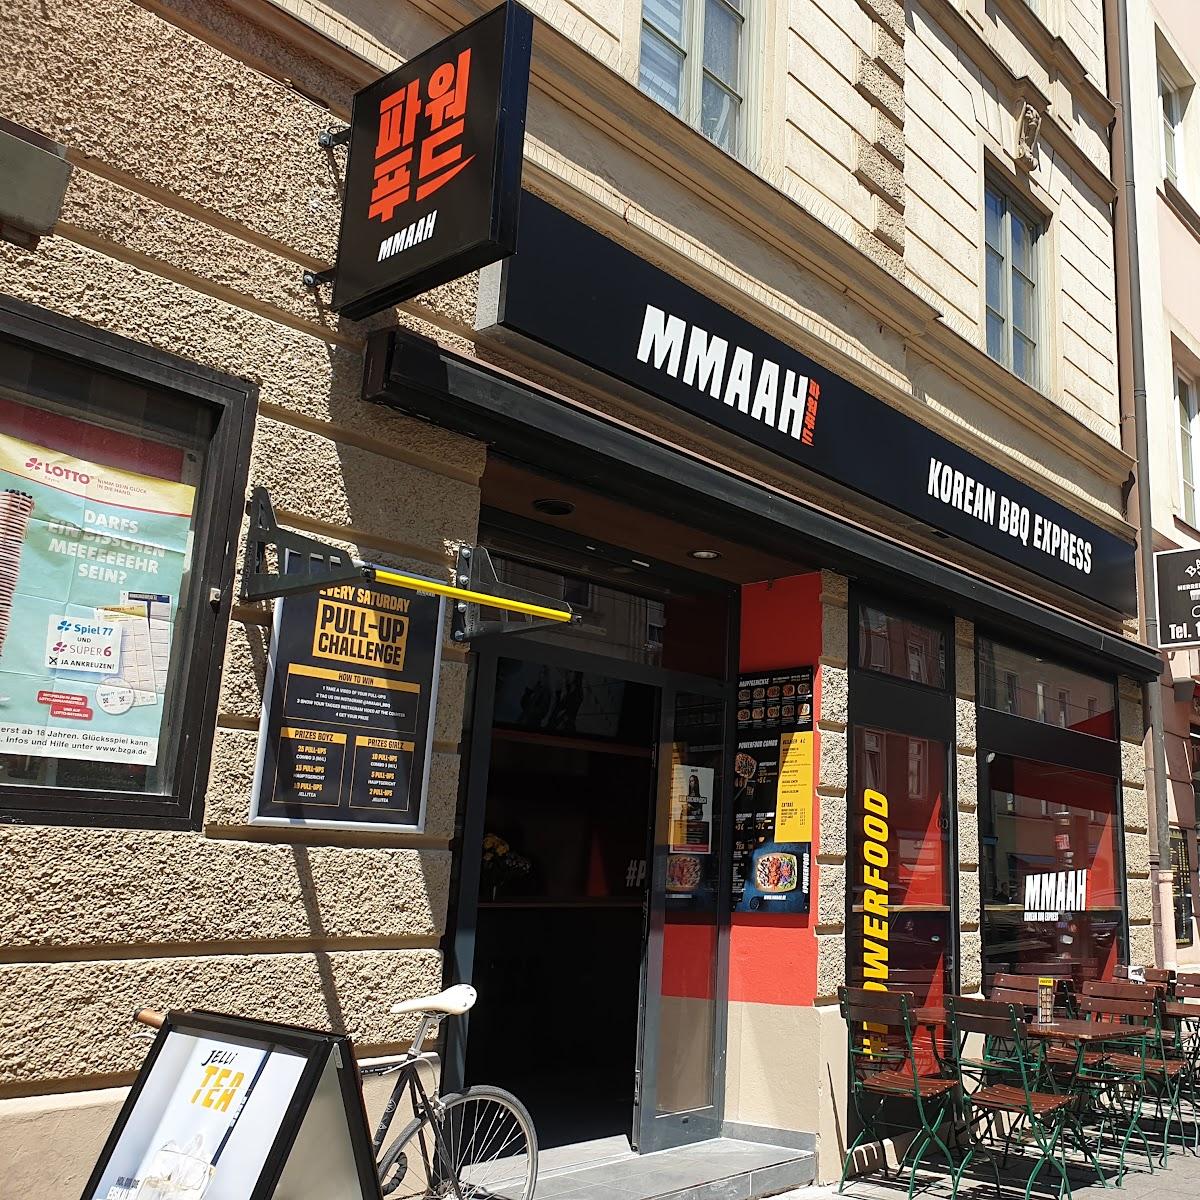 Restaurant "Mmaah - Korean BBQ Express" in München